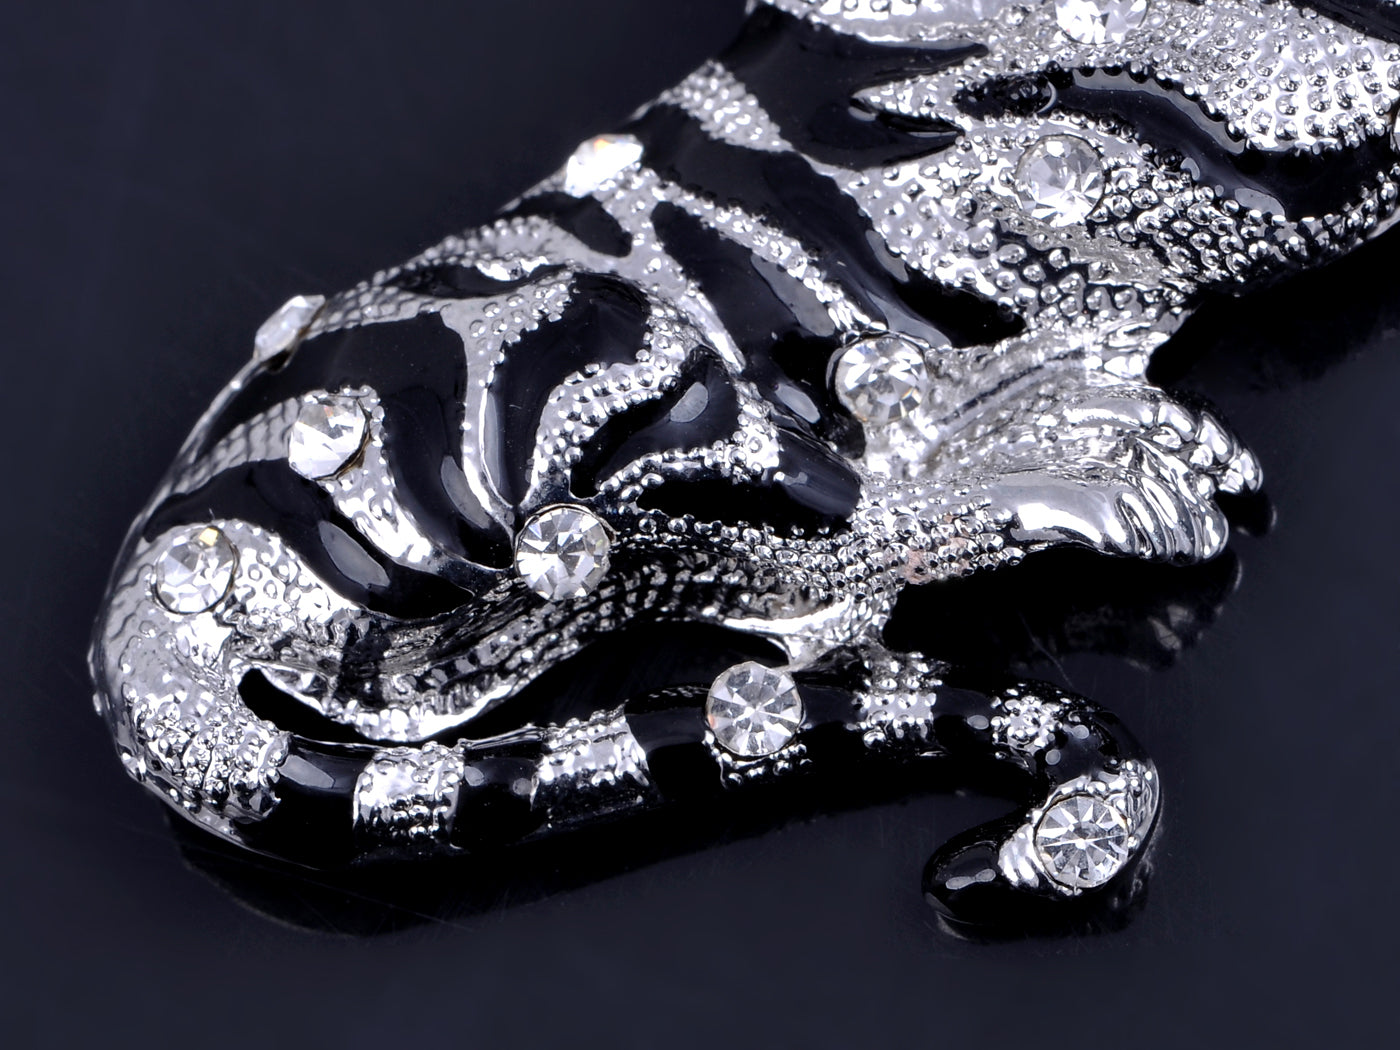 Black Enamel Stripe Tiger Pendant Necklace